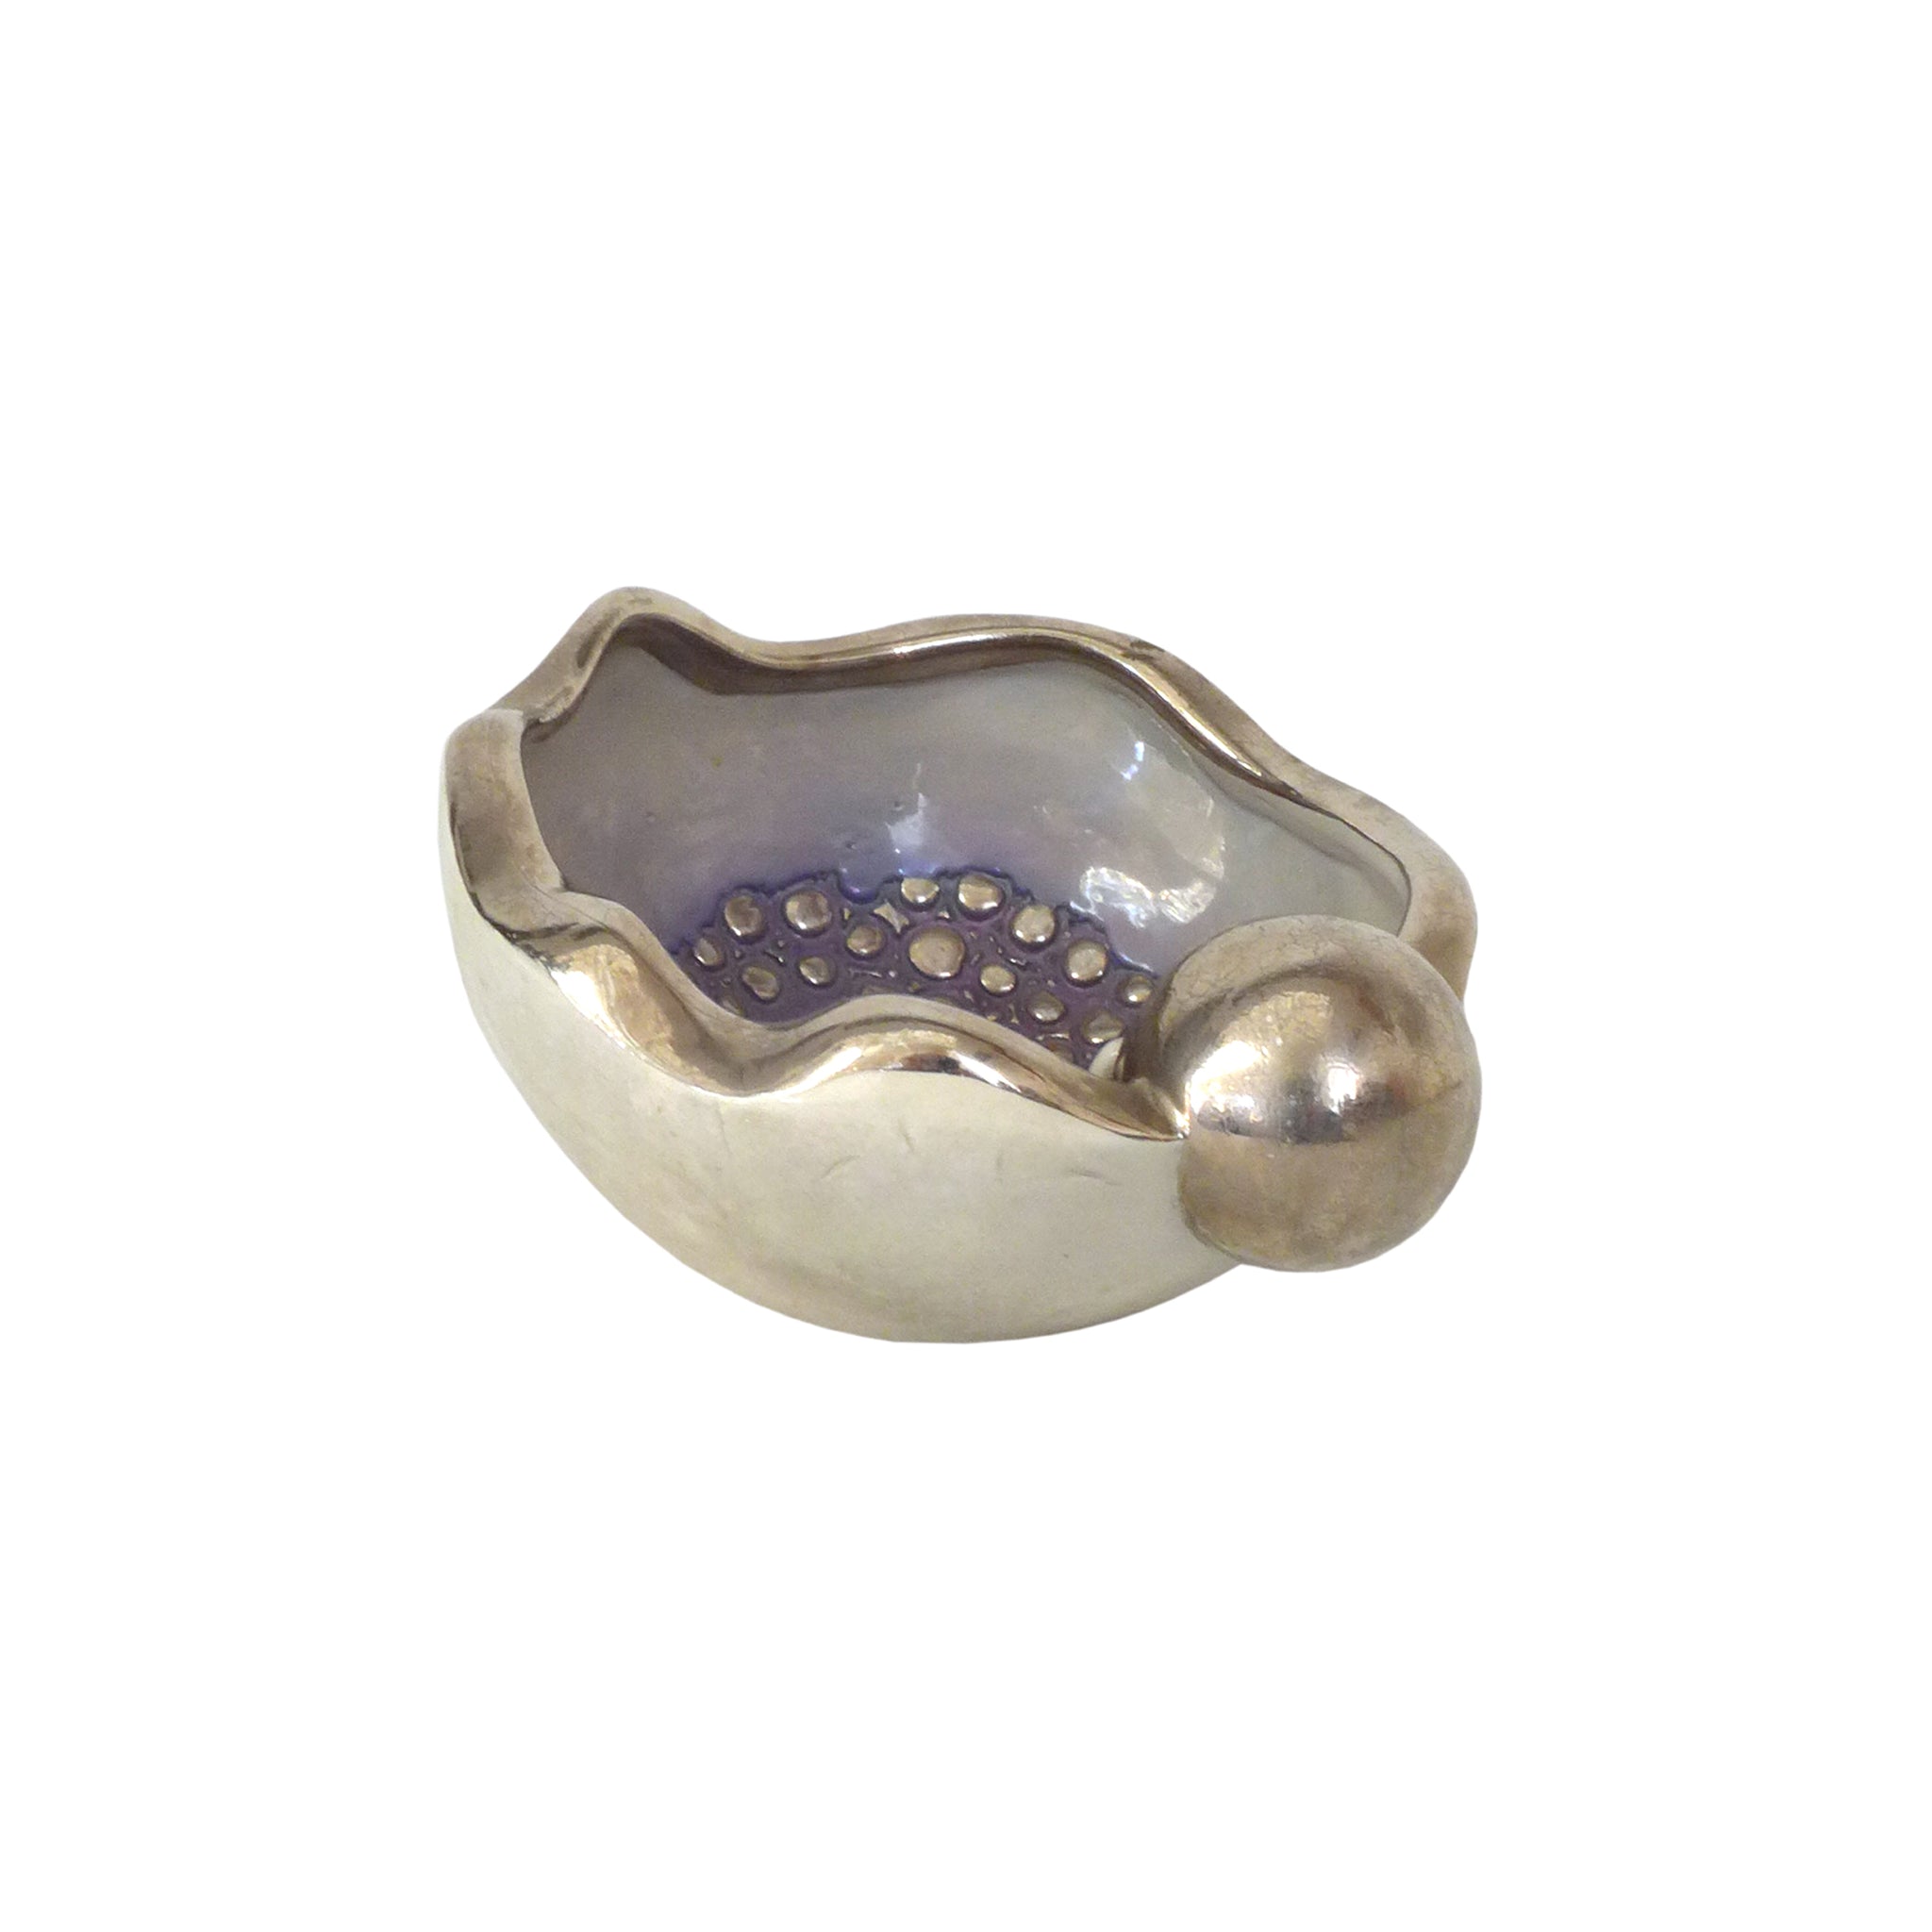 Studio Ceramic Biomorphic Metallic Glaze Bowl or Catch-All